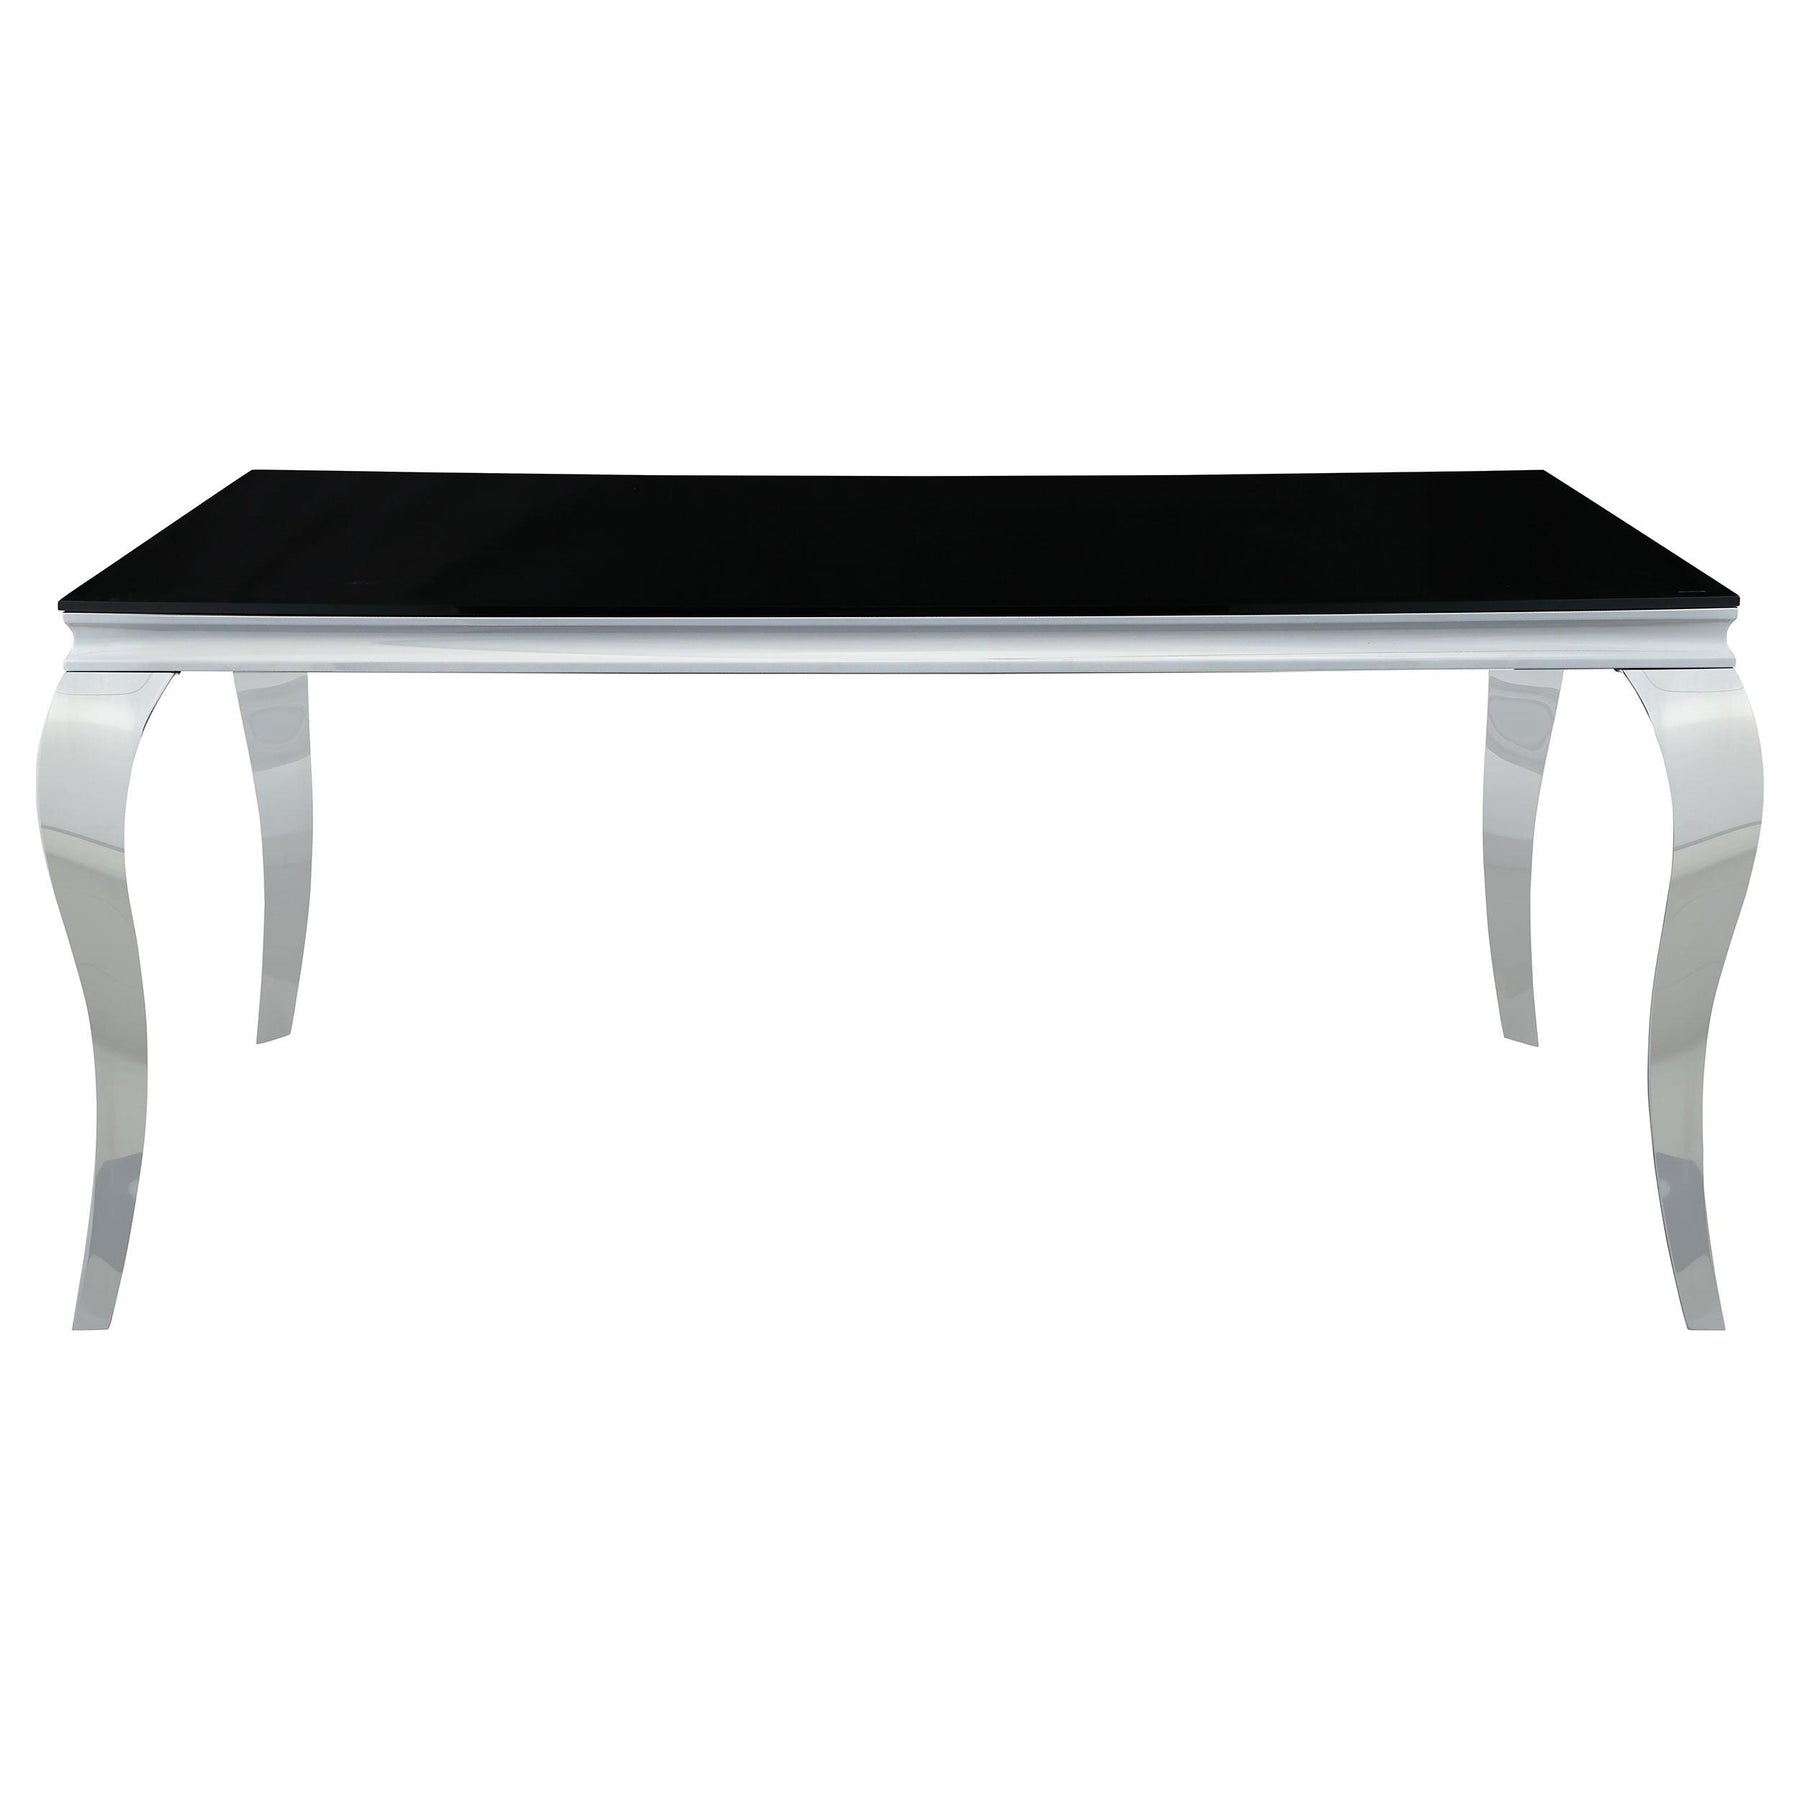 Carone Rectangular Dining Table Chrome and Black Carone Rectangular Dining Table Chrome and Black Half Price Furniture